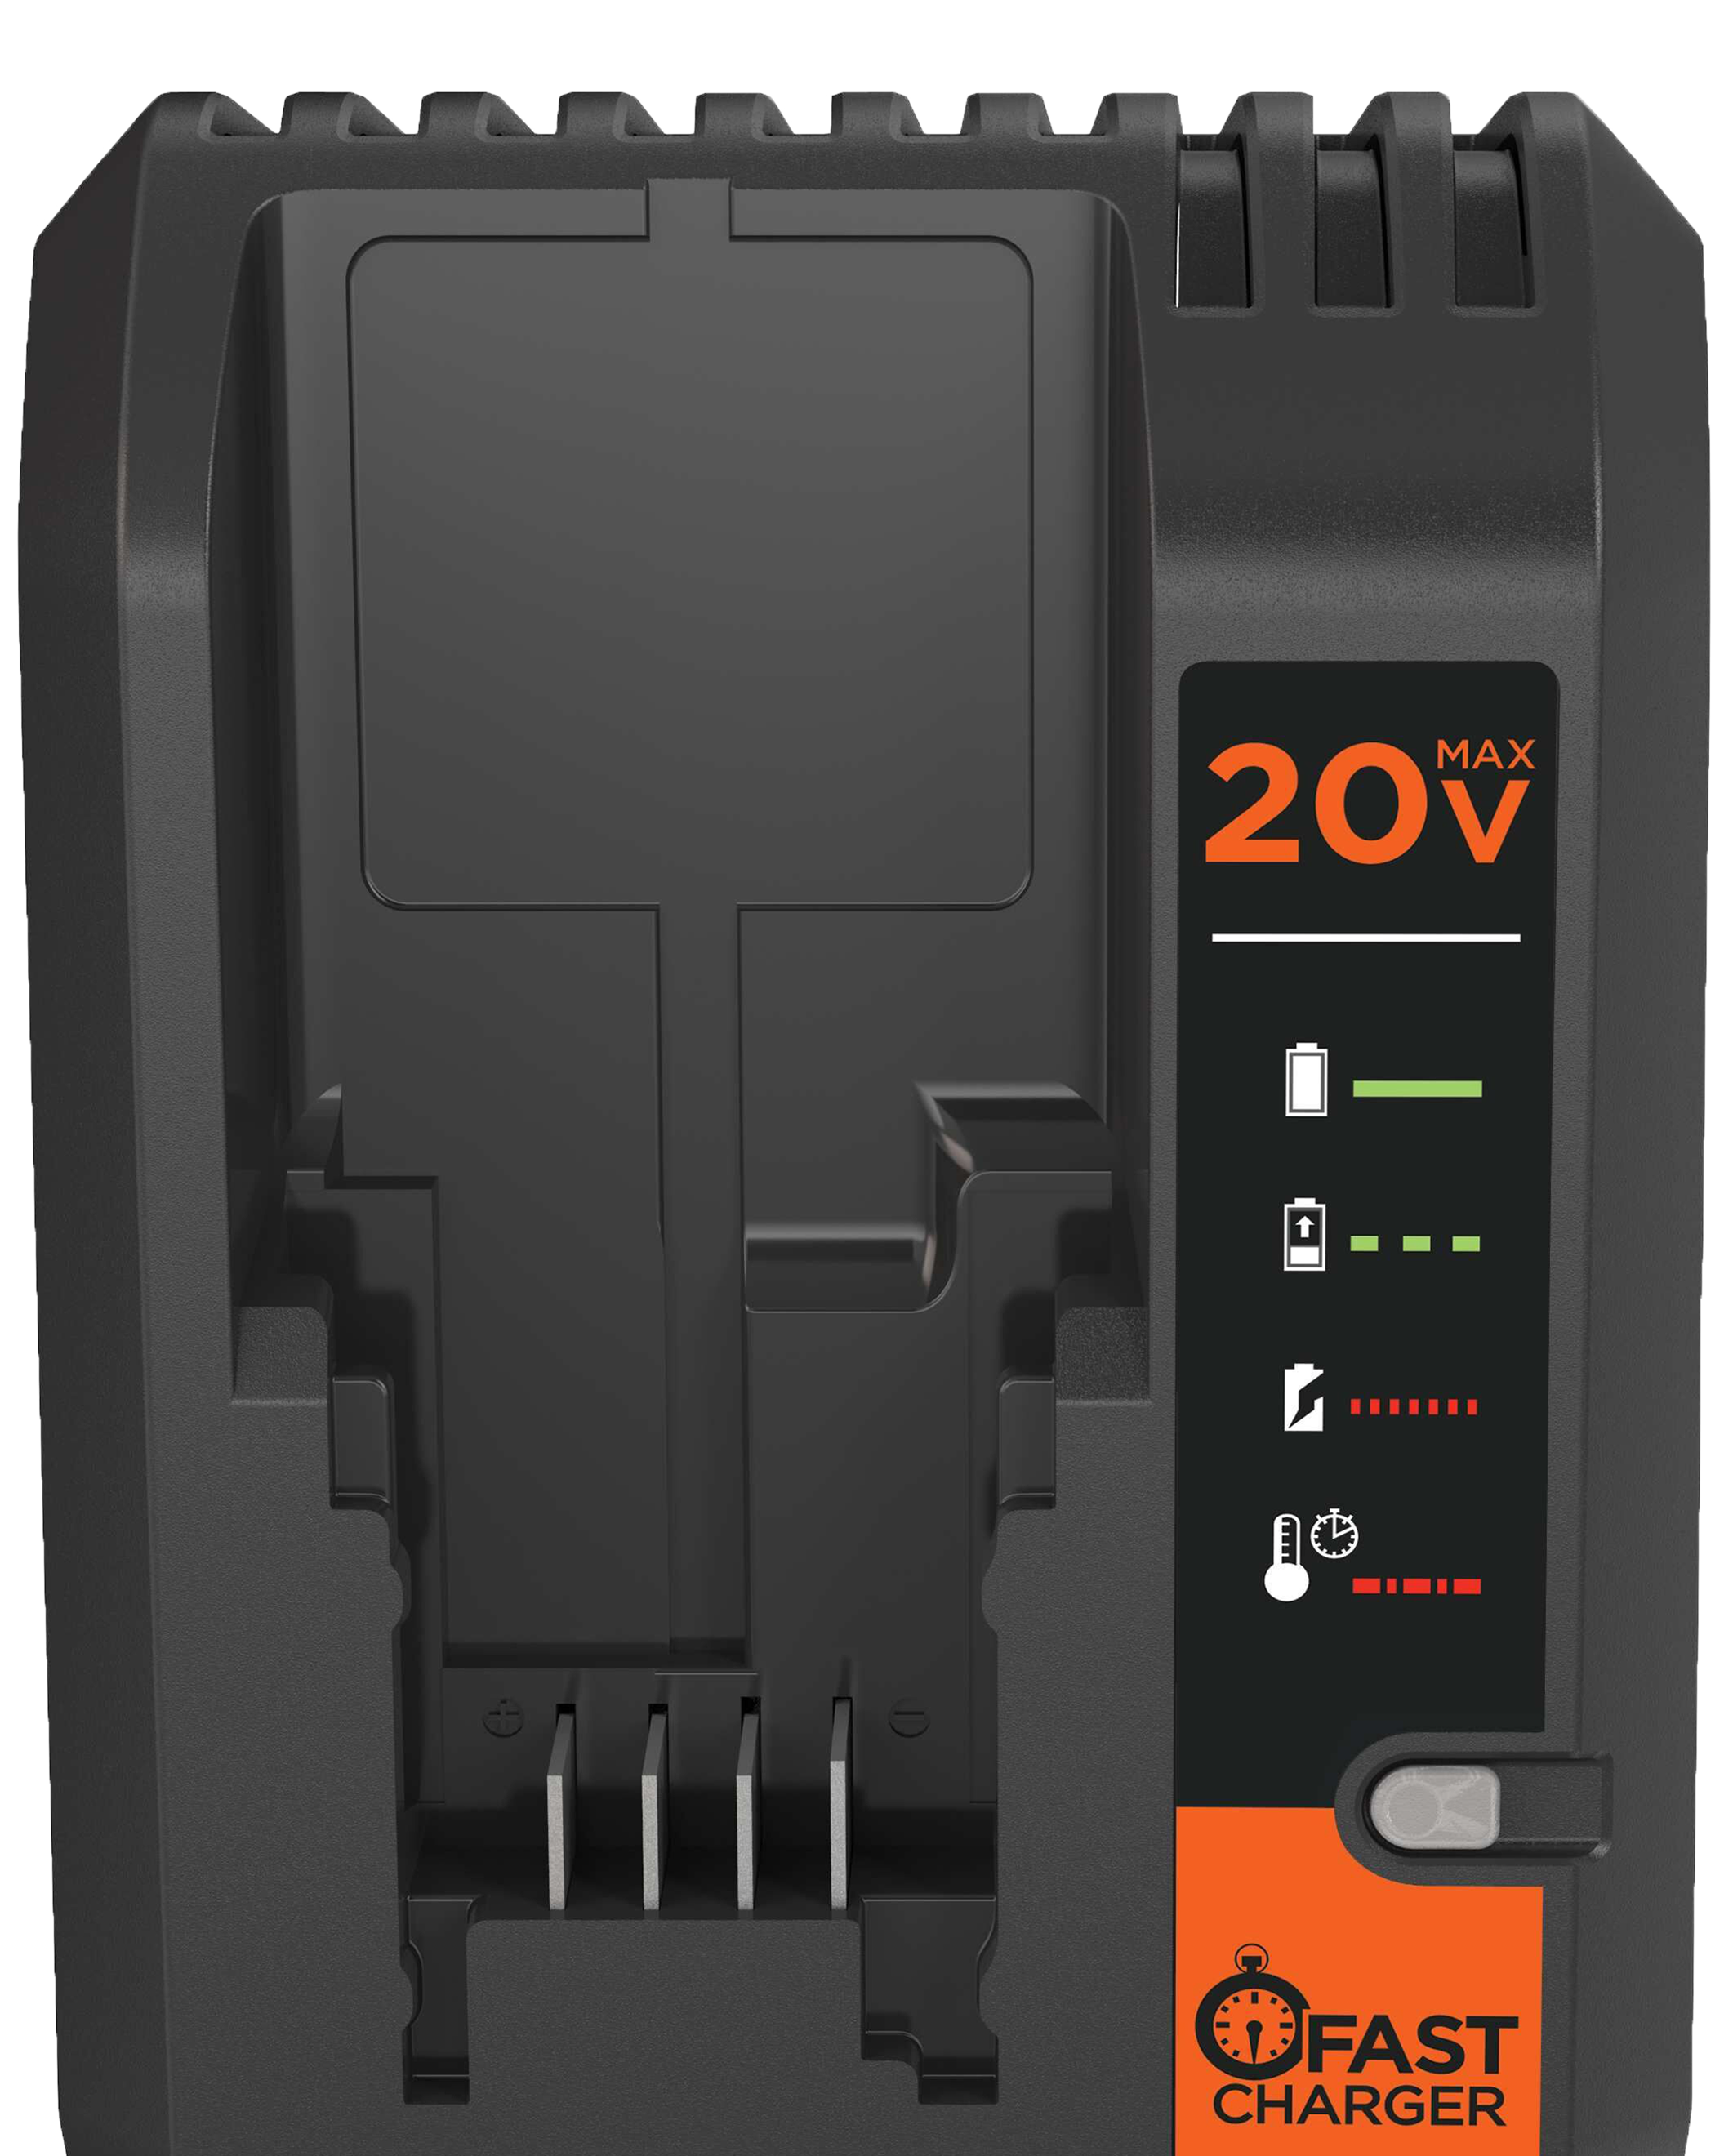 HQRP 20V Li-Ion Battery Charger Compatible with Black and Decker BDCDE120C  BDCDMT120 BDC120VA100 LD120CBF LD120VA Electric Drill